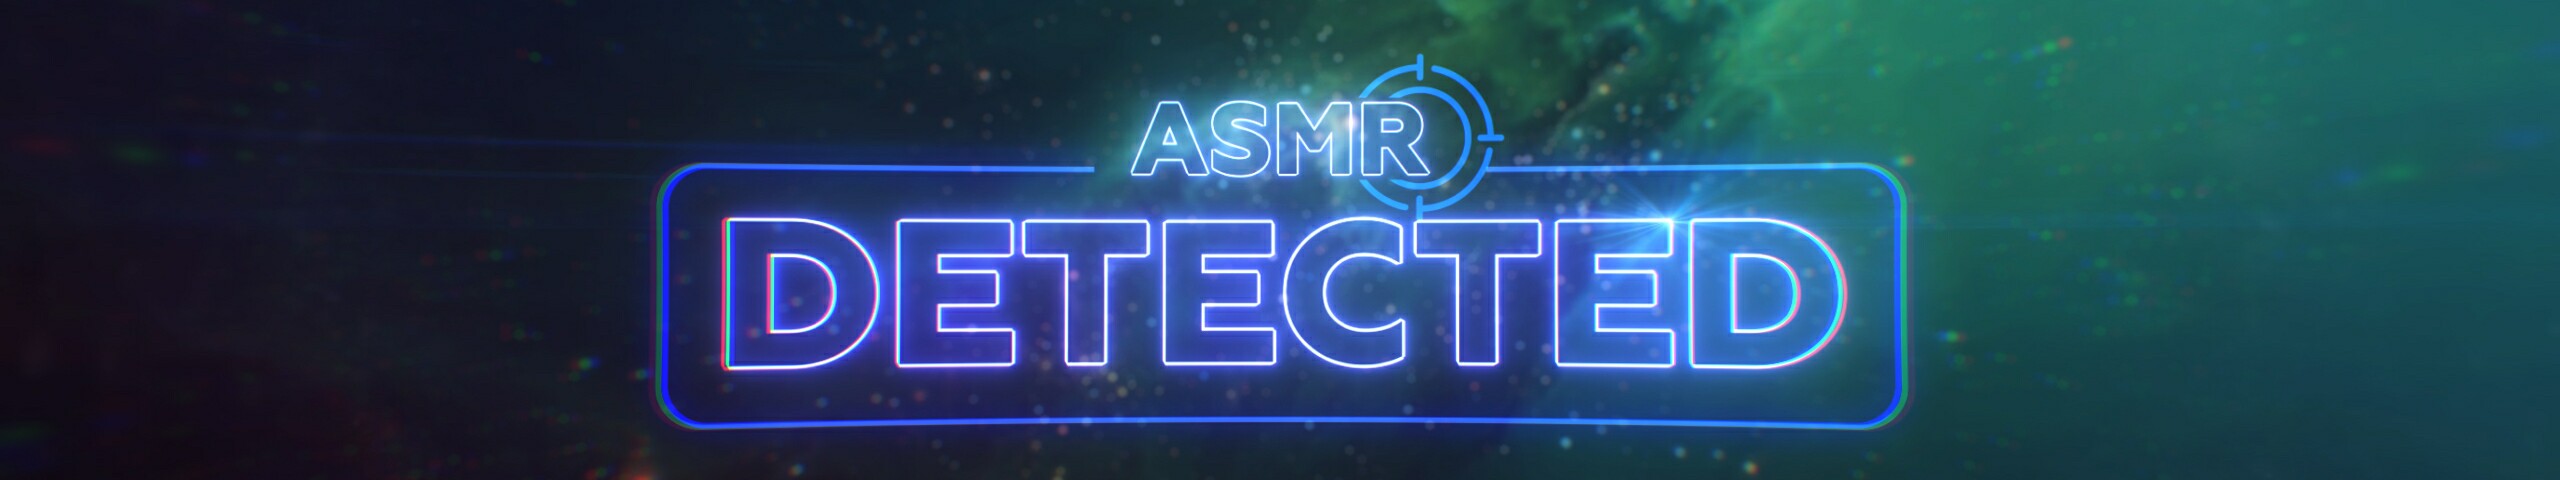 creator cover ASMR Detected